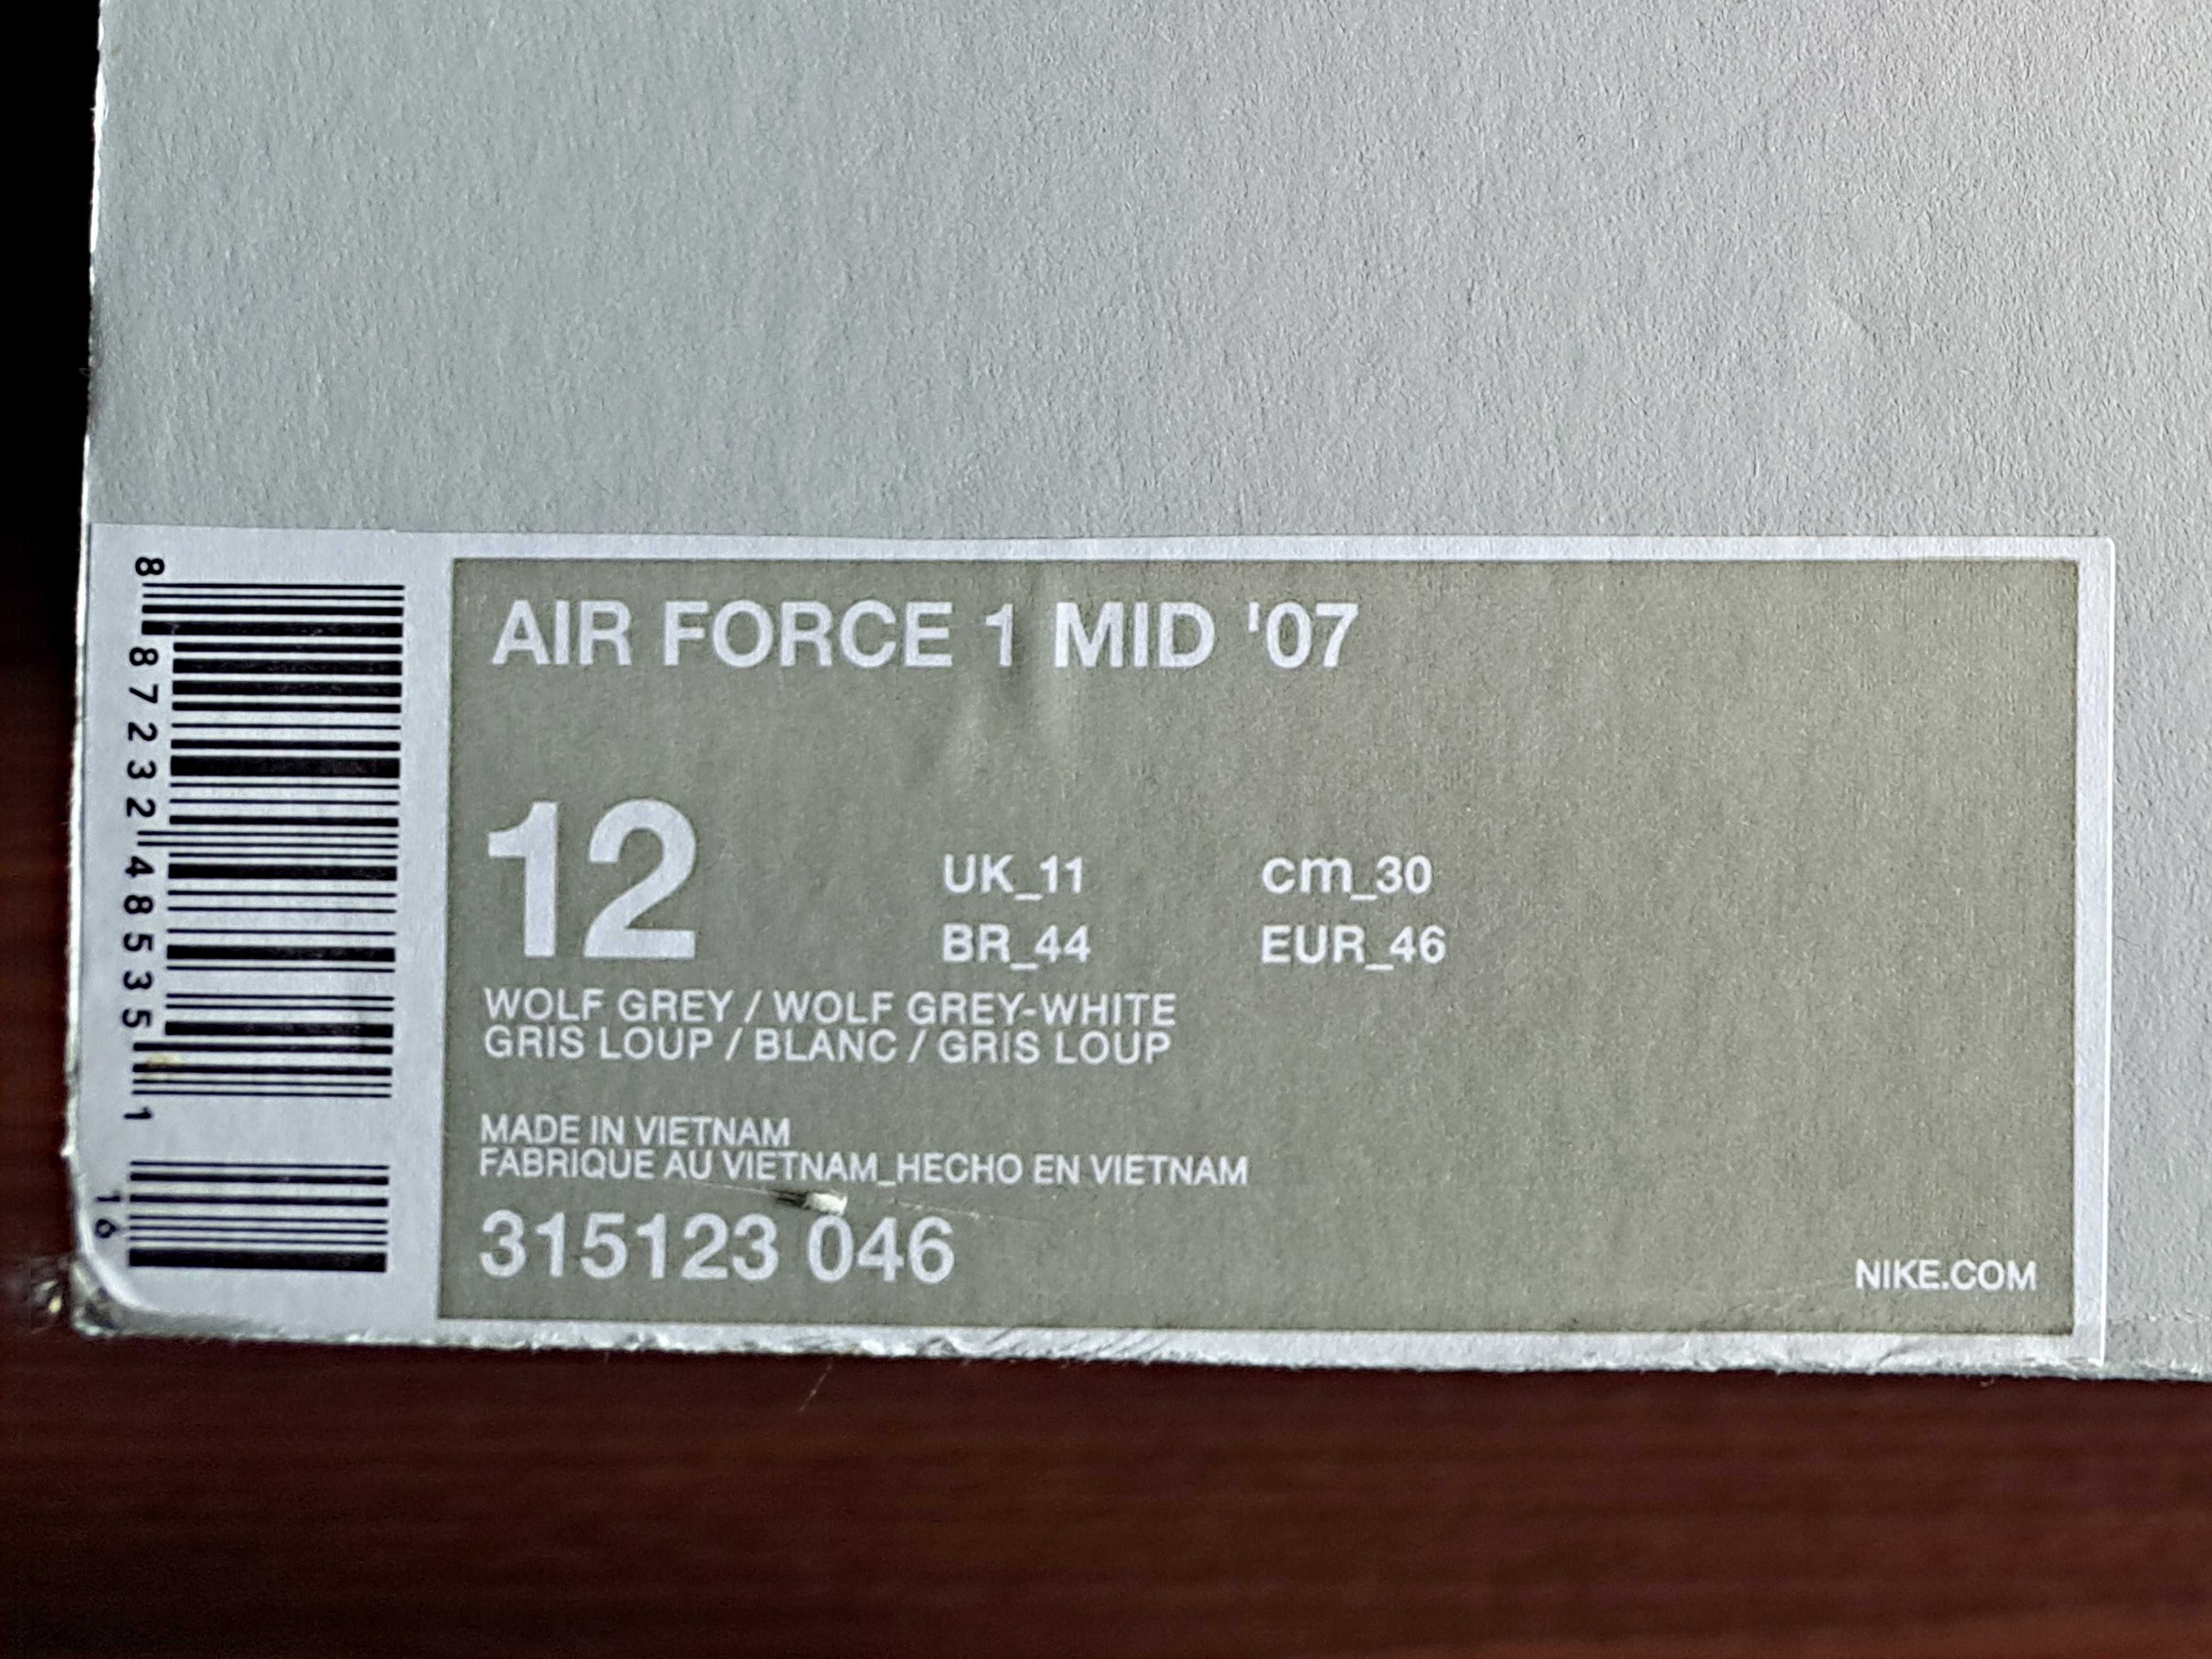 Nike Air Force 1 MID '07 WOLF GREY, UK 11, EUR 46